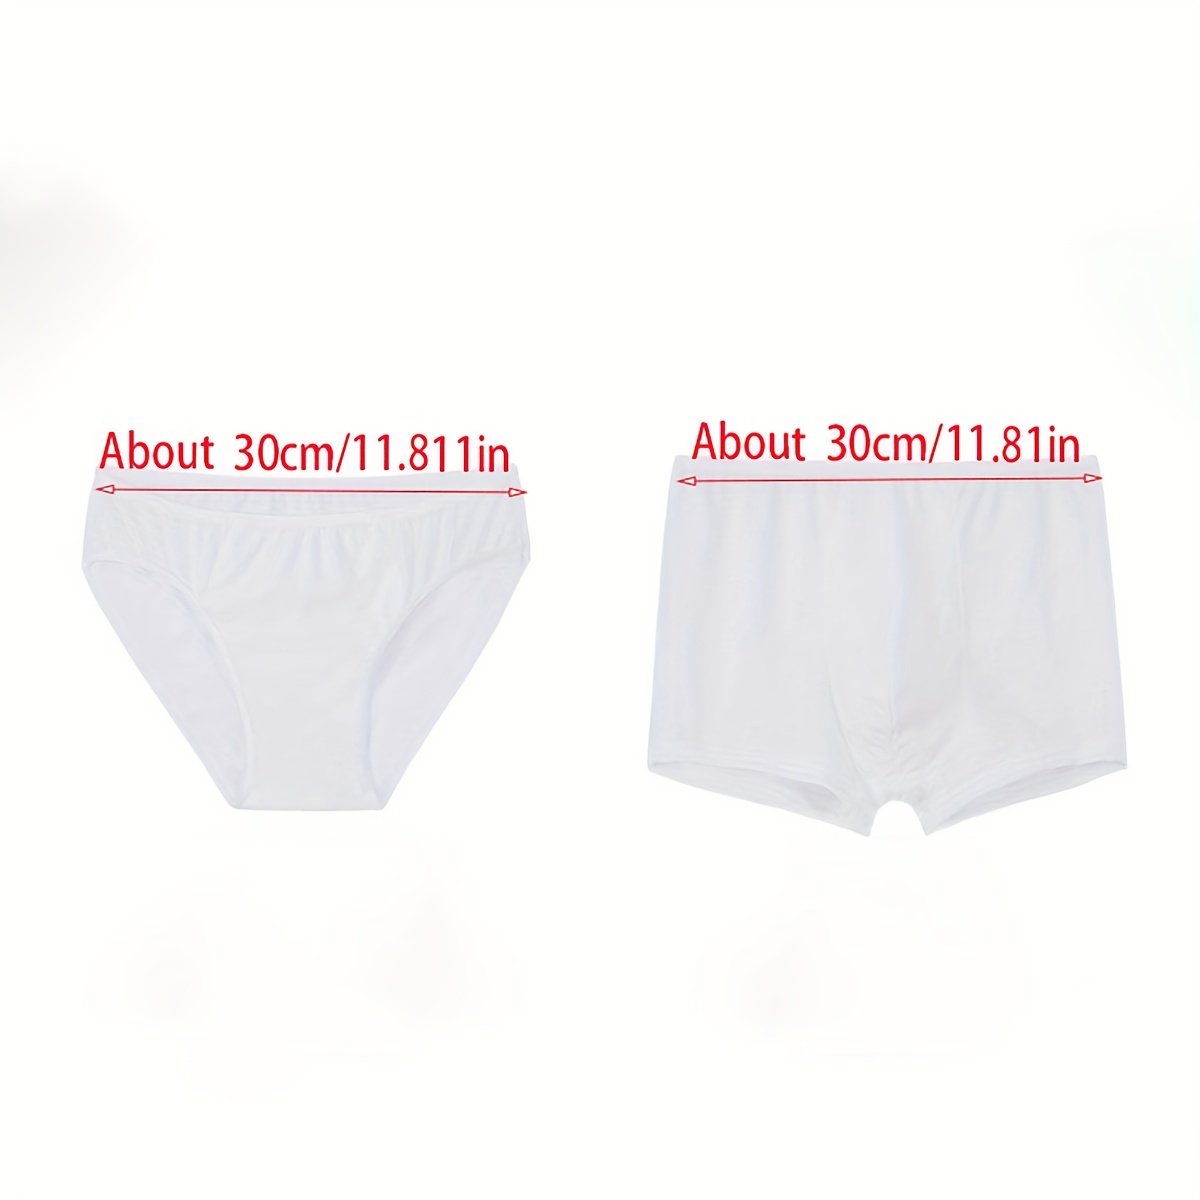 Disposable Cotton Underwear Men's